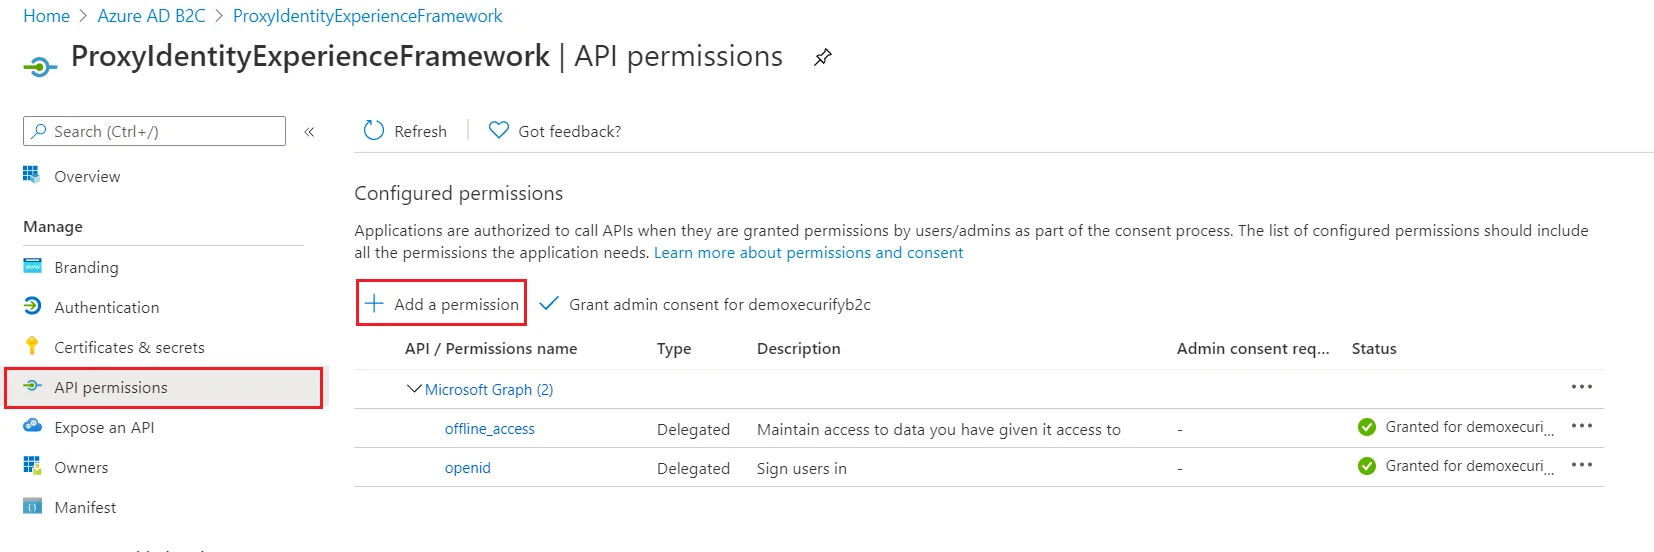 ASP.NET SAML Single Sign-On (SSO) using Azure B2C as IDP - authentication